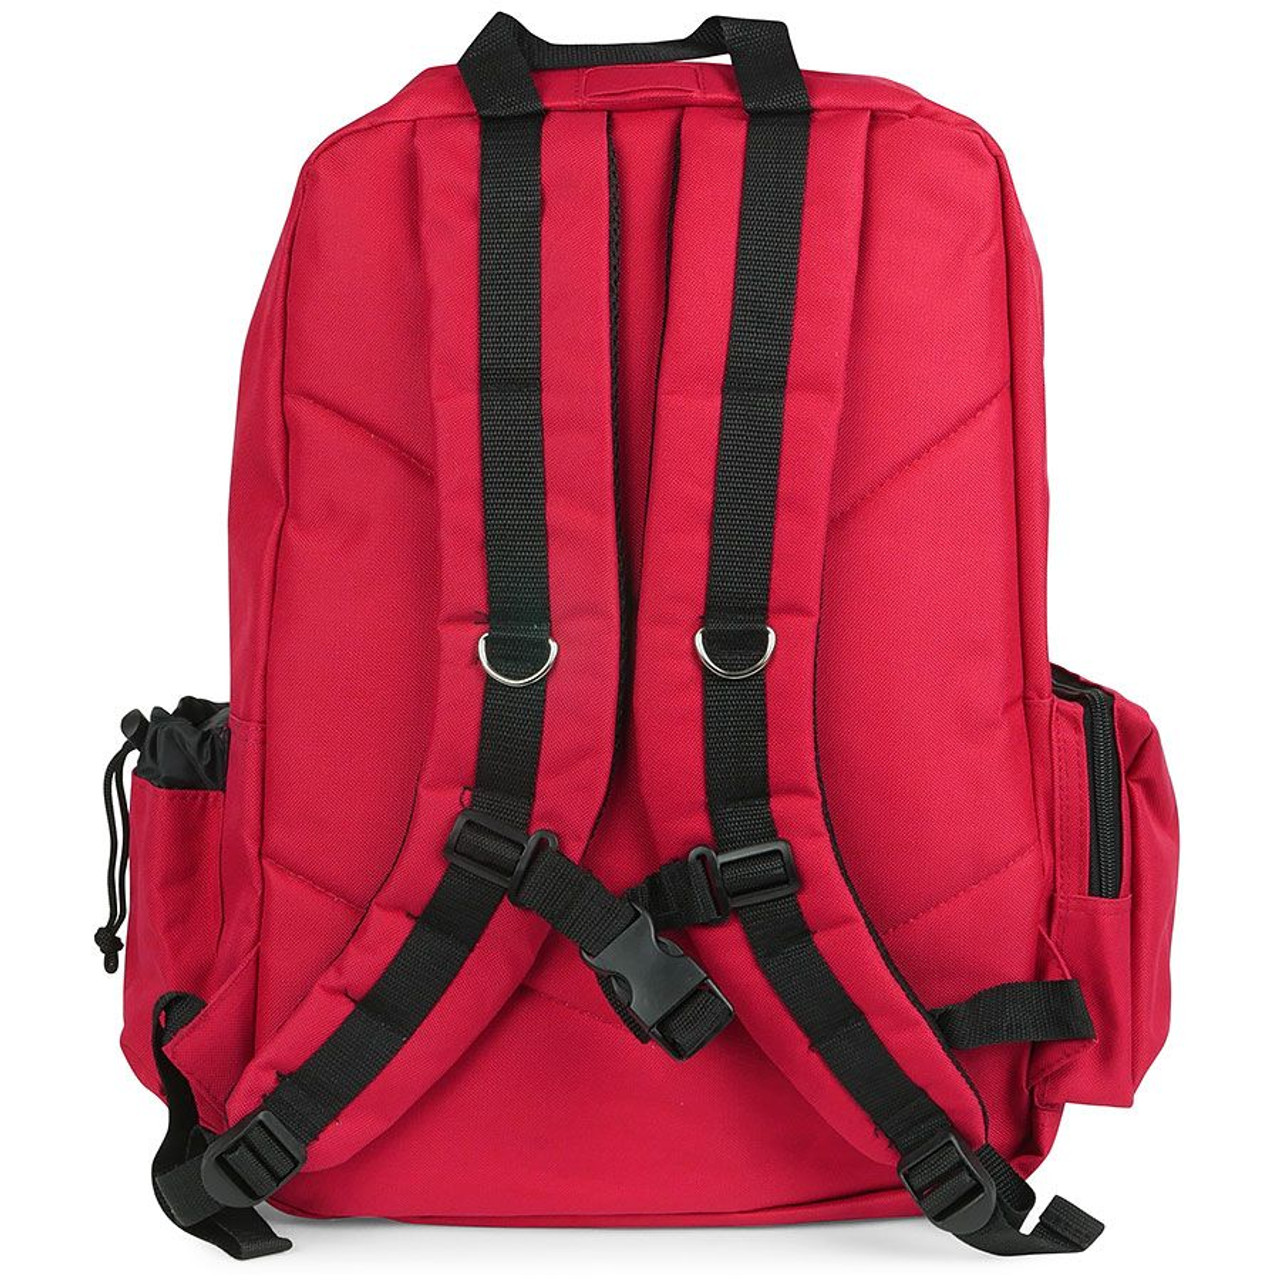 Deluxe Red Emergency Backpack - Gear Bag - Nylon